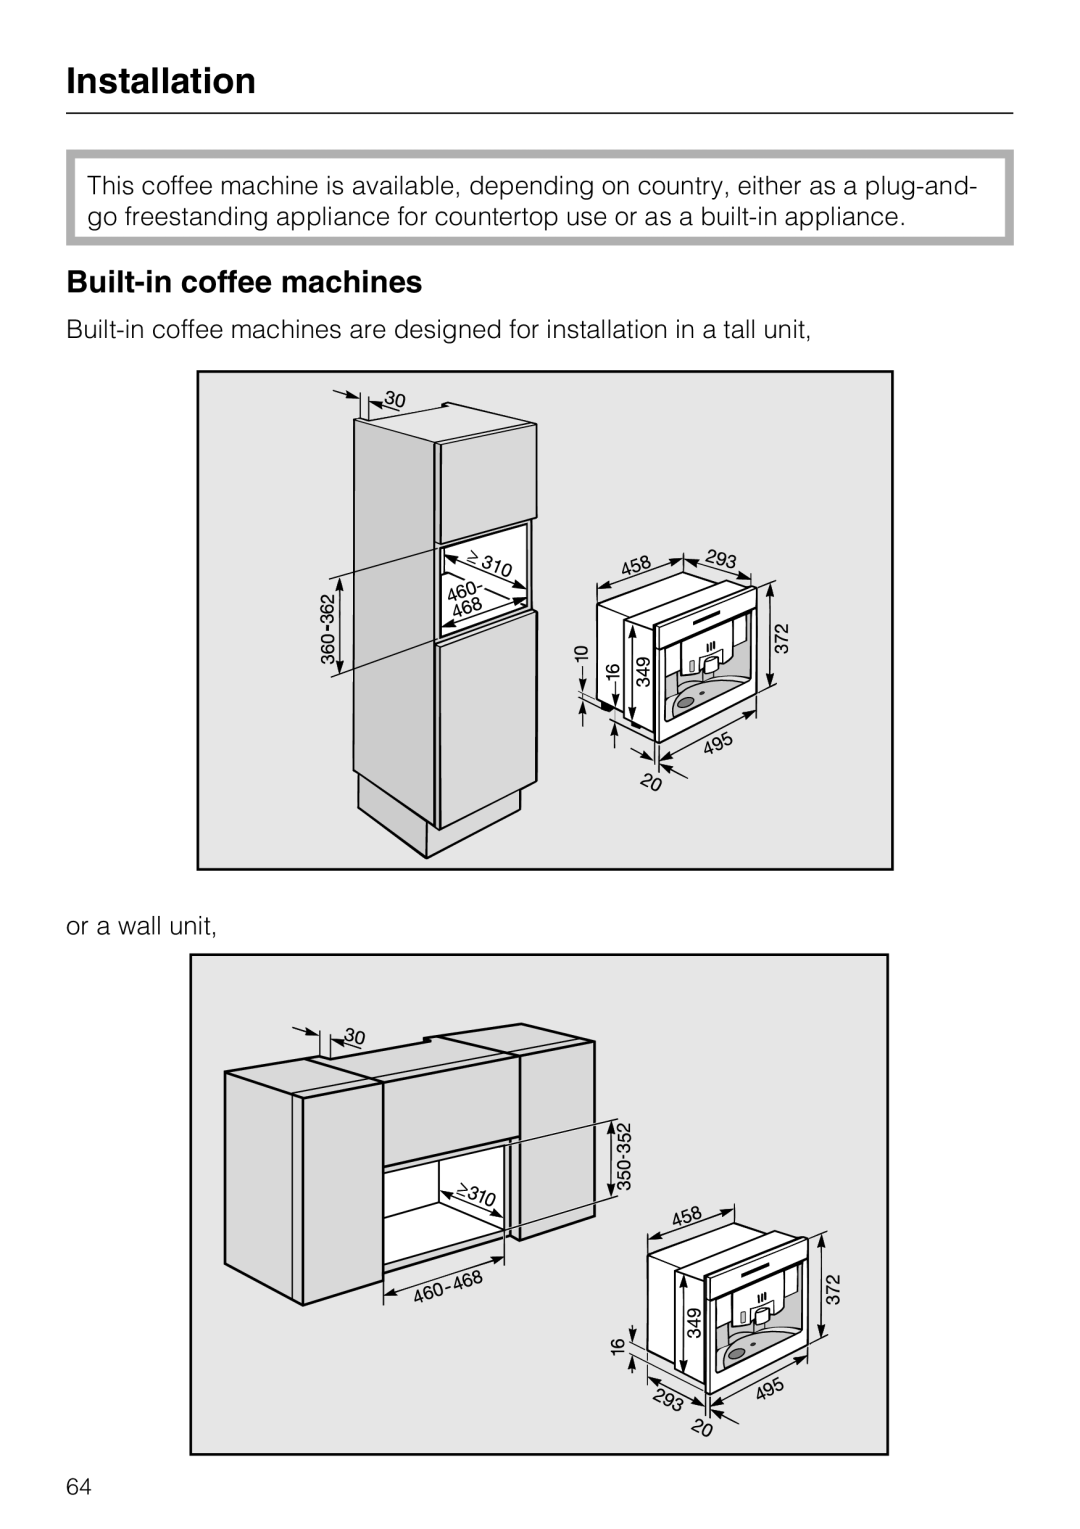 Miele CVA 3650 installation instructions Installation, Built-incoffee machines 